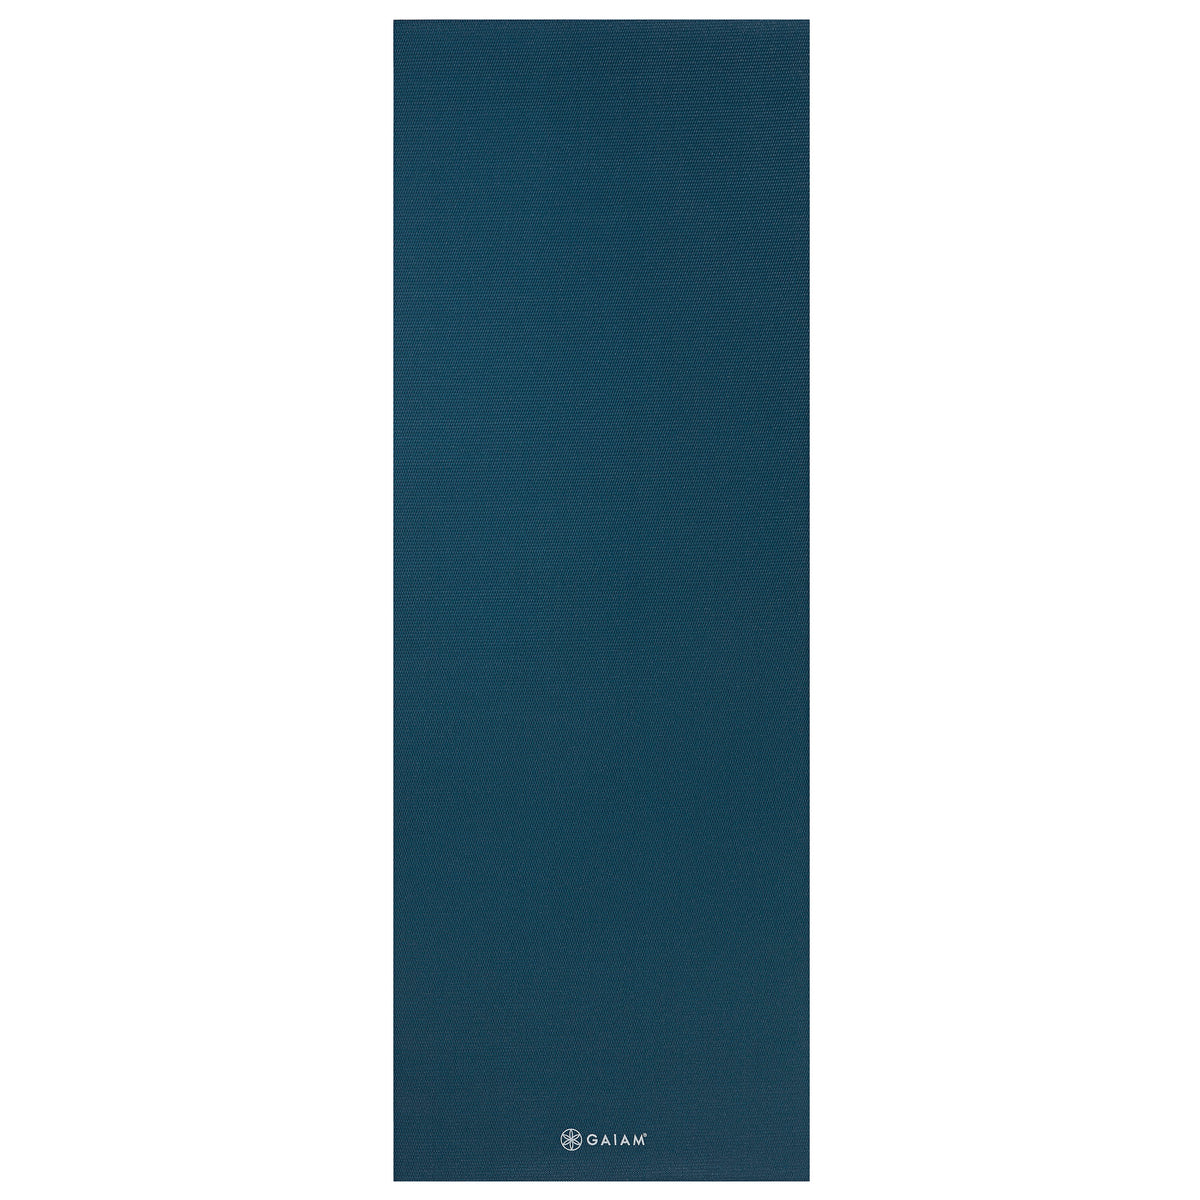 Gaiam Classic Solid Color Yoga Mat (5mm) Marine flat